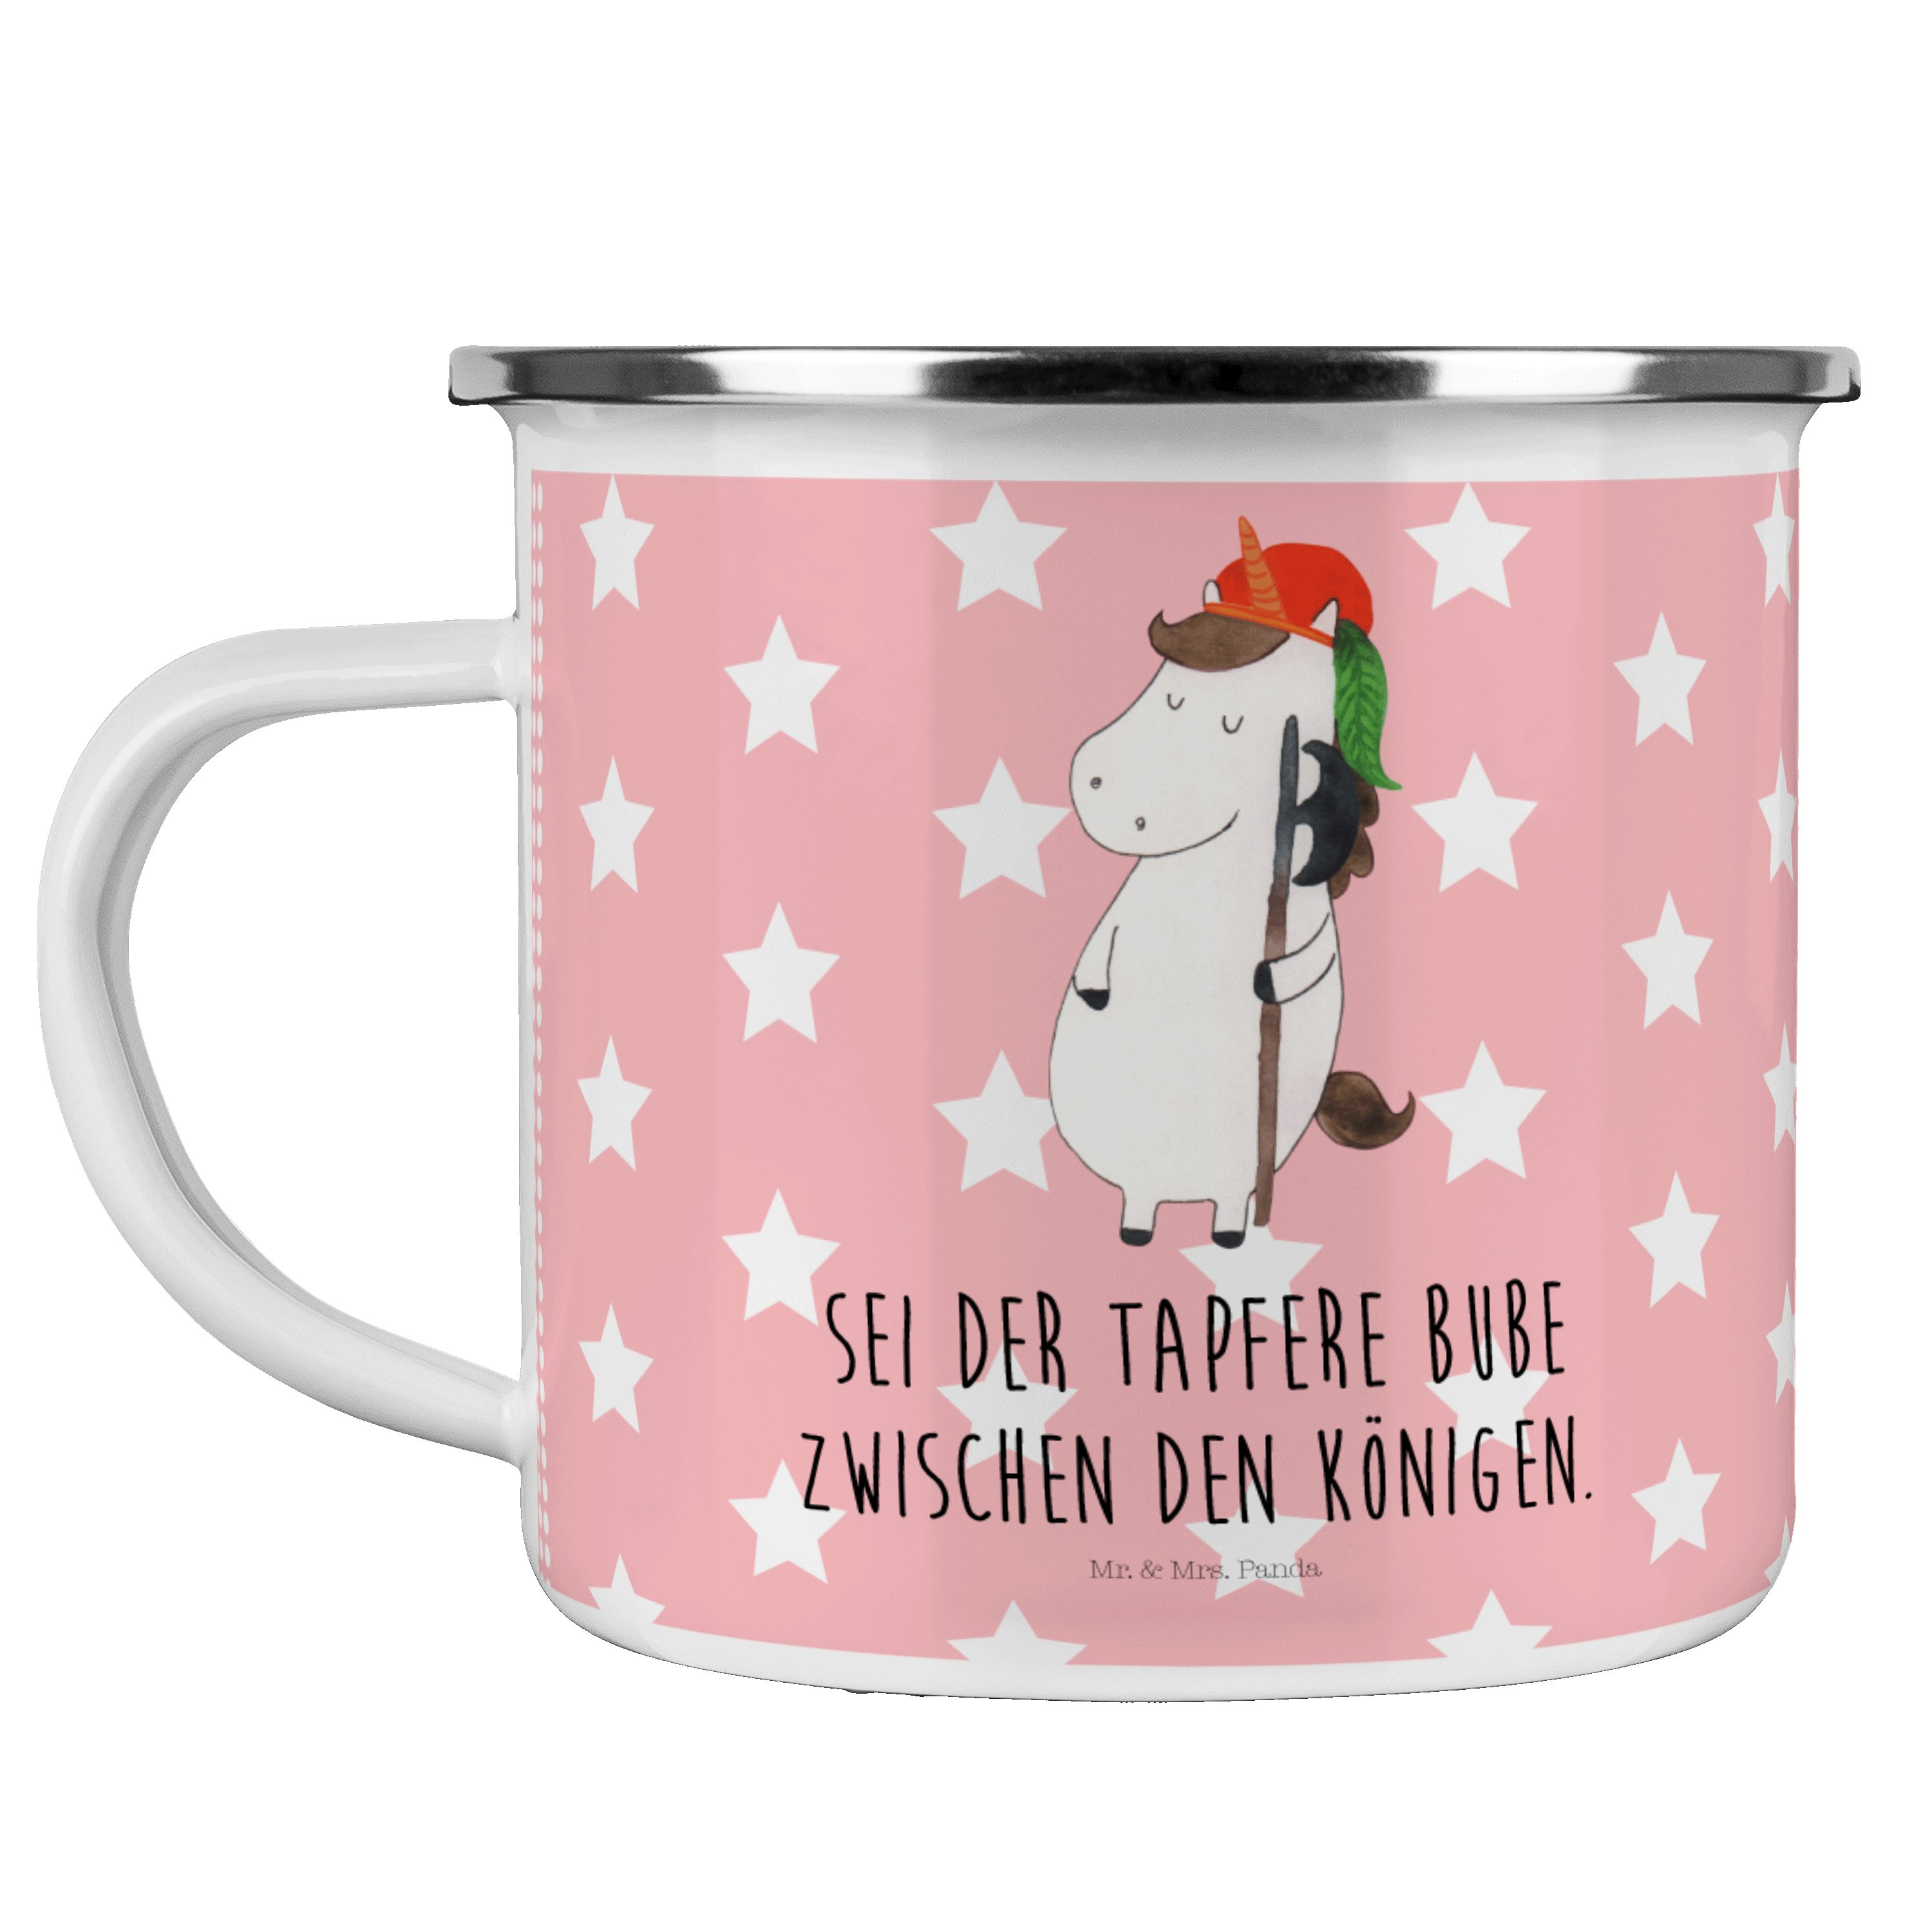 Mr. & Mrs. Panda Becher Einhorn Bube - Rot Pastell - Geschenk, Mittelalter, Camping Tasse Met, Emaille